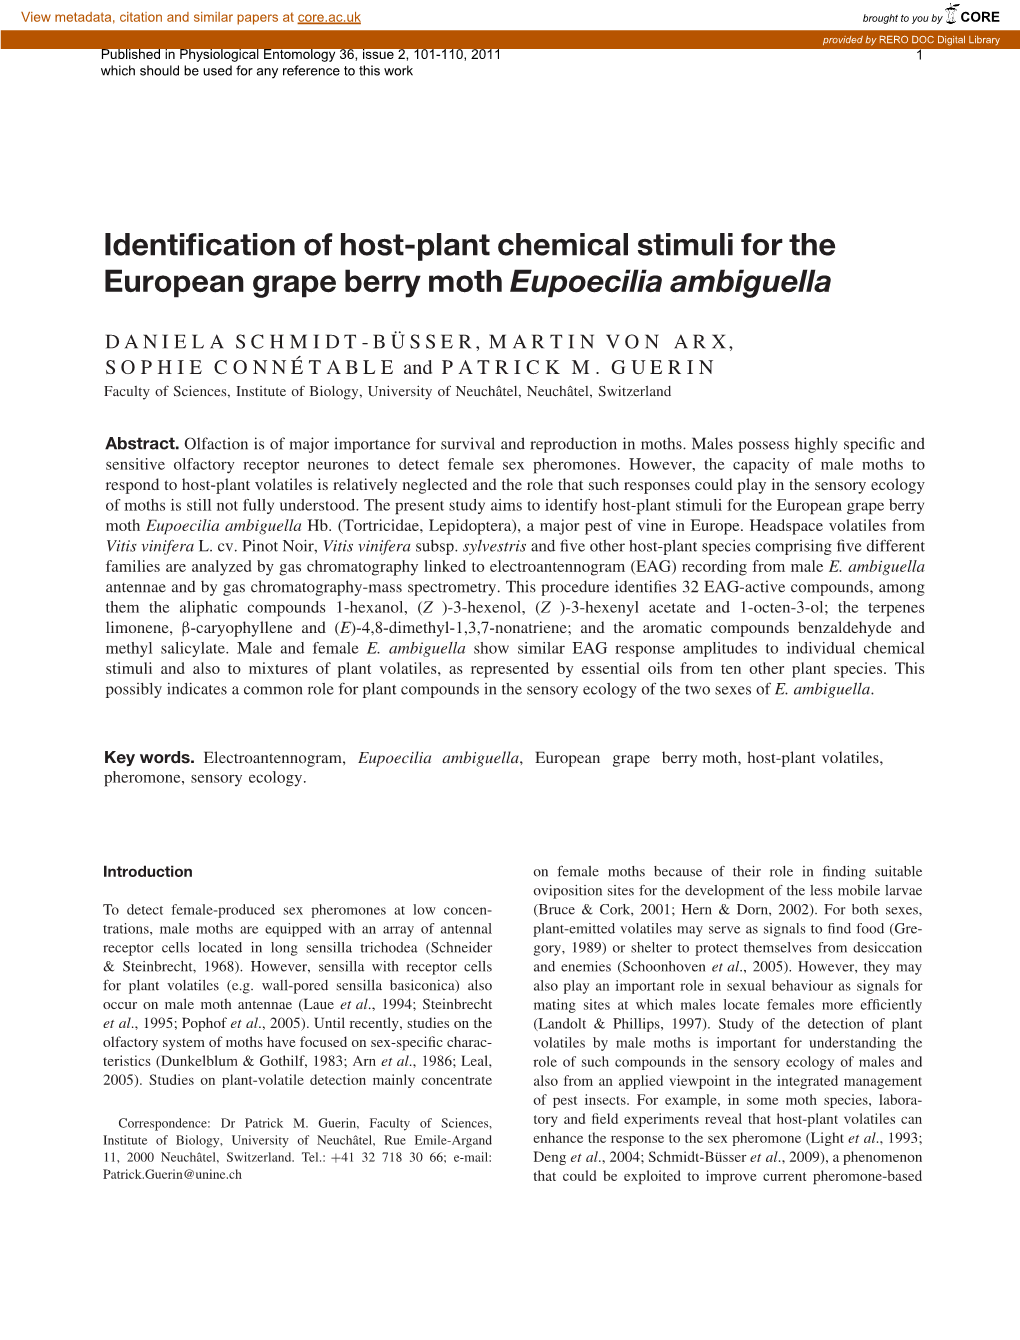 Identification of Hostplant Chemical Stimuli for the European Grape Berry